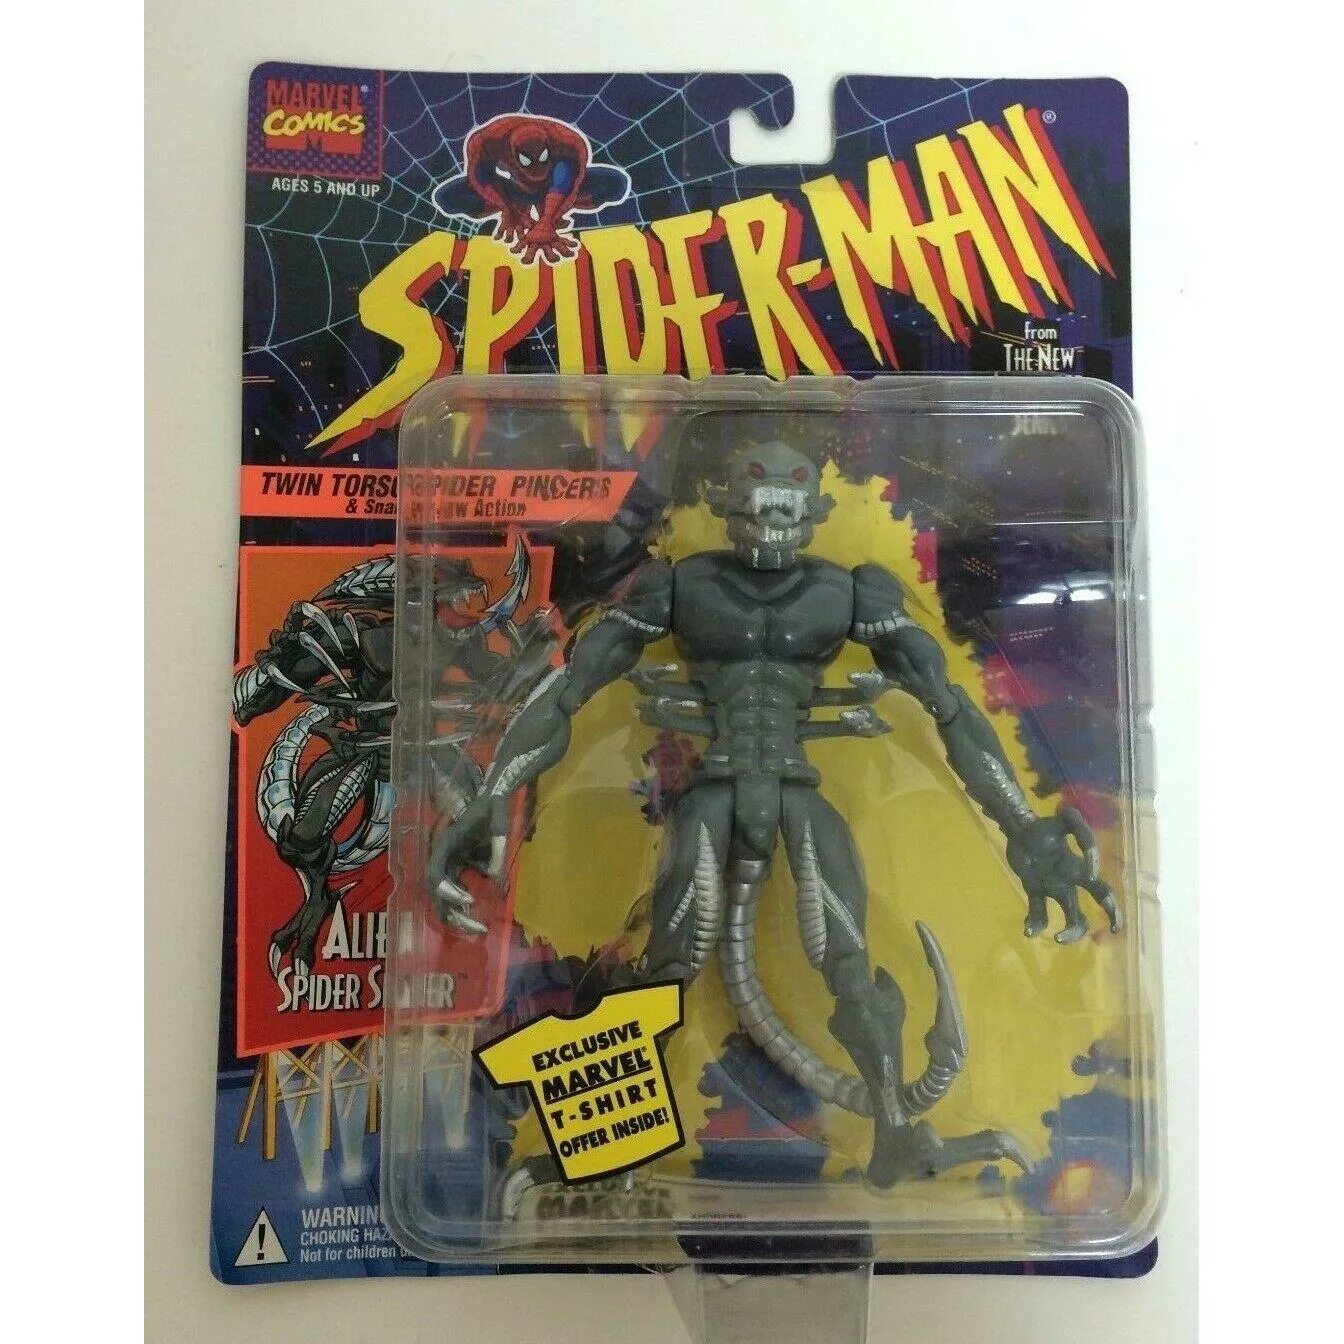 Spider man animated Series Toys. Игрушки Spider-man New the animated Series. Marvel Comics Hasbro Alien Spider Slayer фигурка. Toy biz